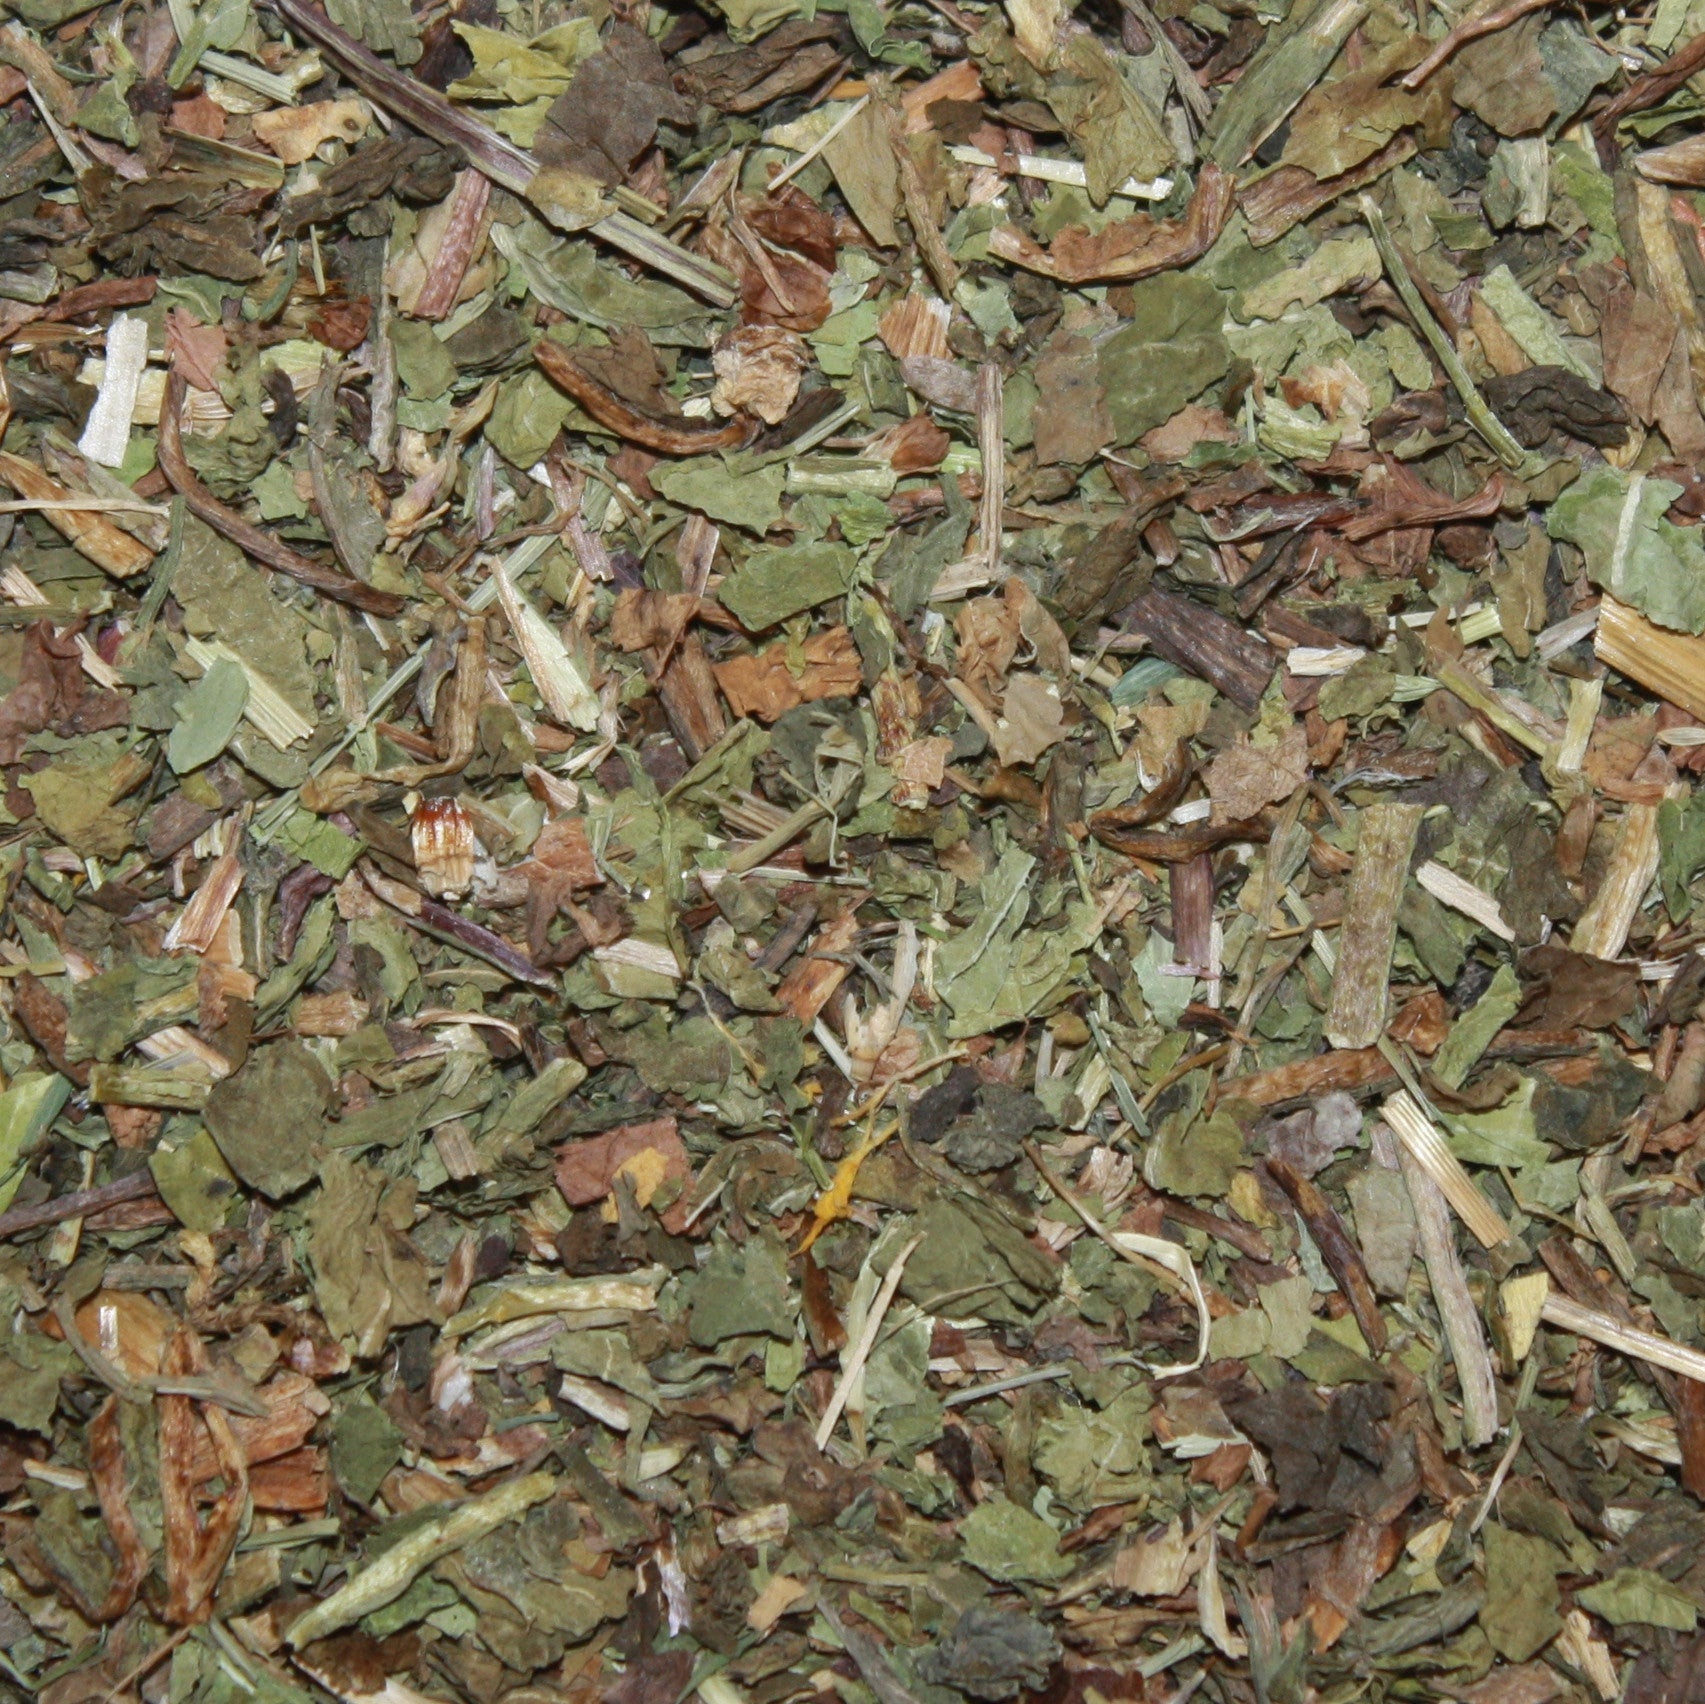 Dandelion Cut Leaf - Magical Herbs for Ritual, Spells & Incense Making (25g)